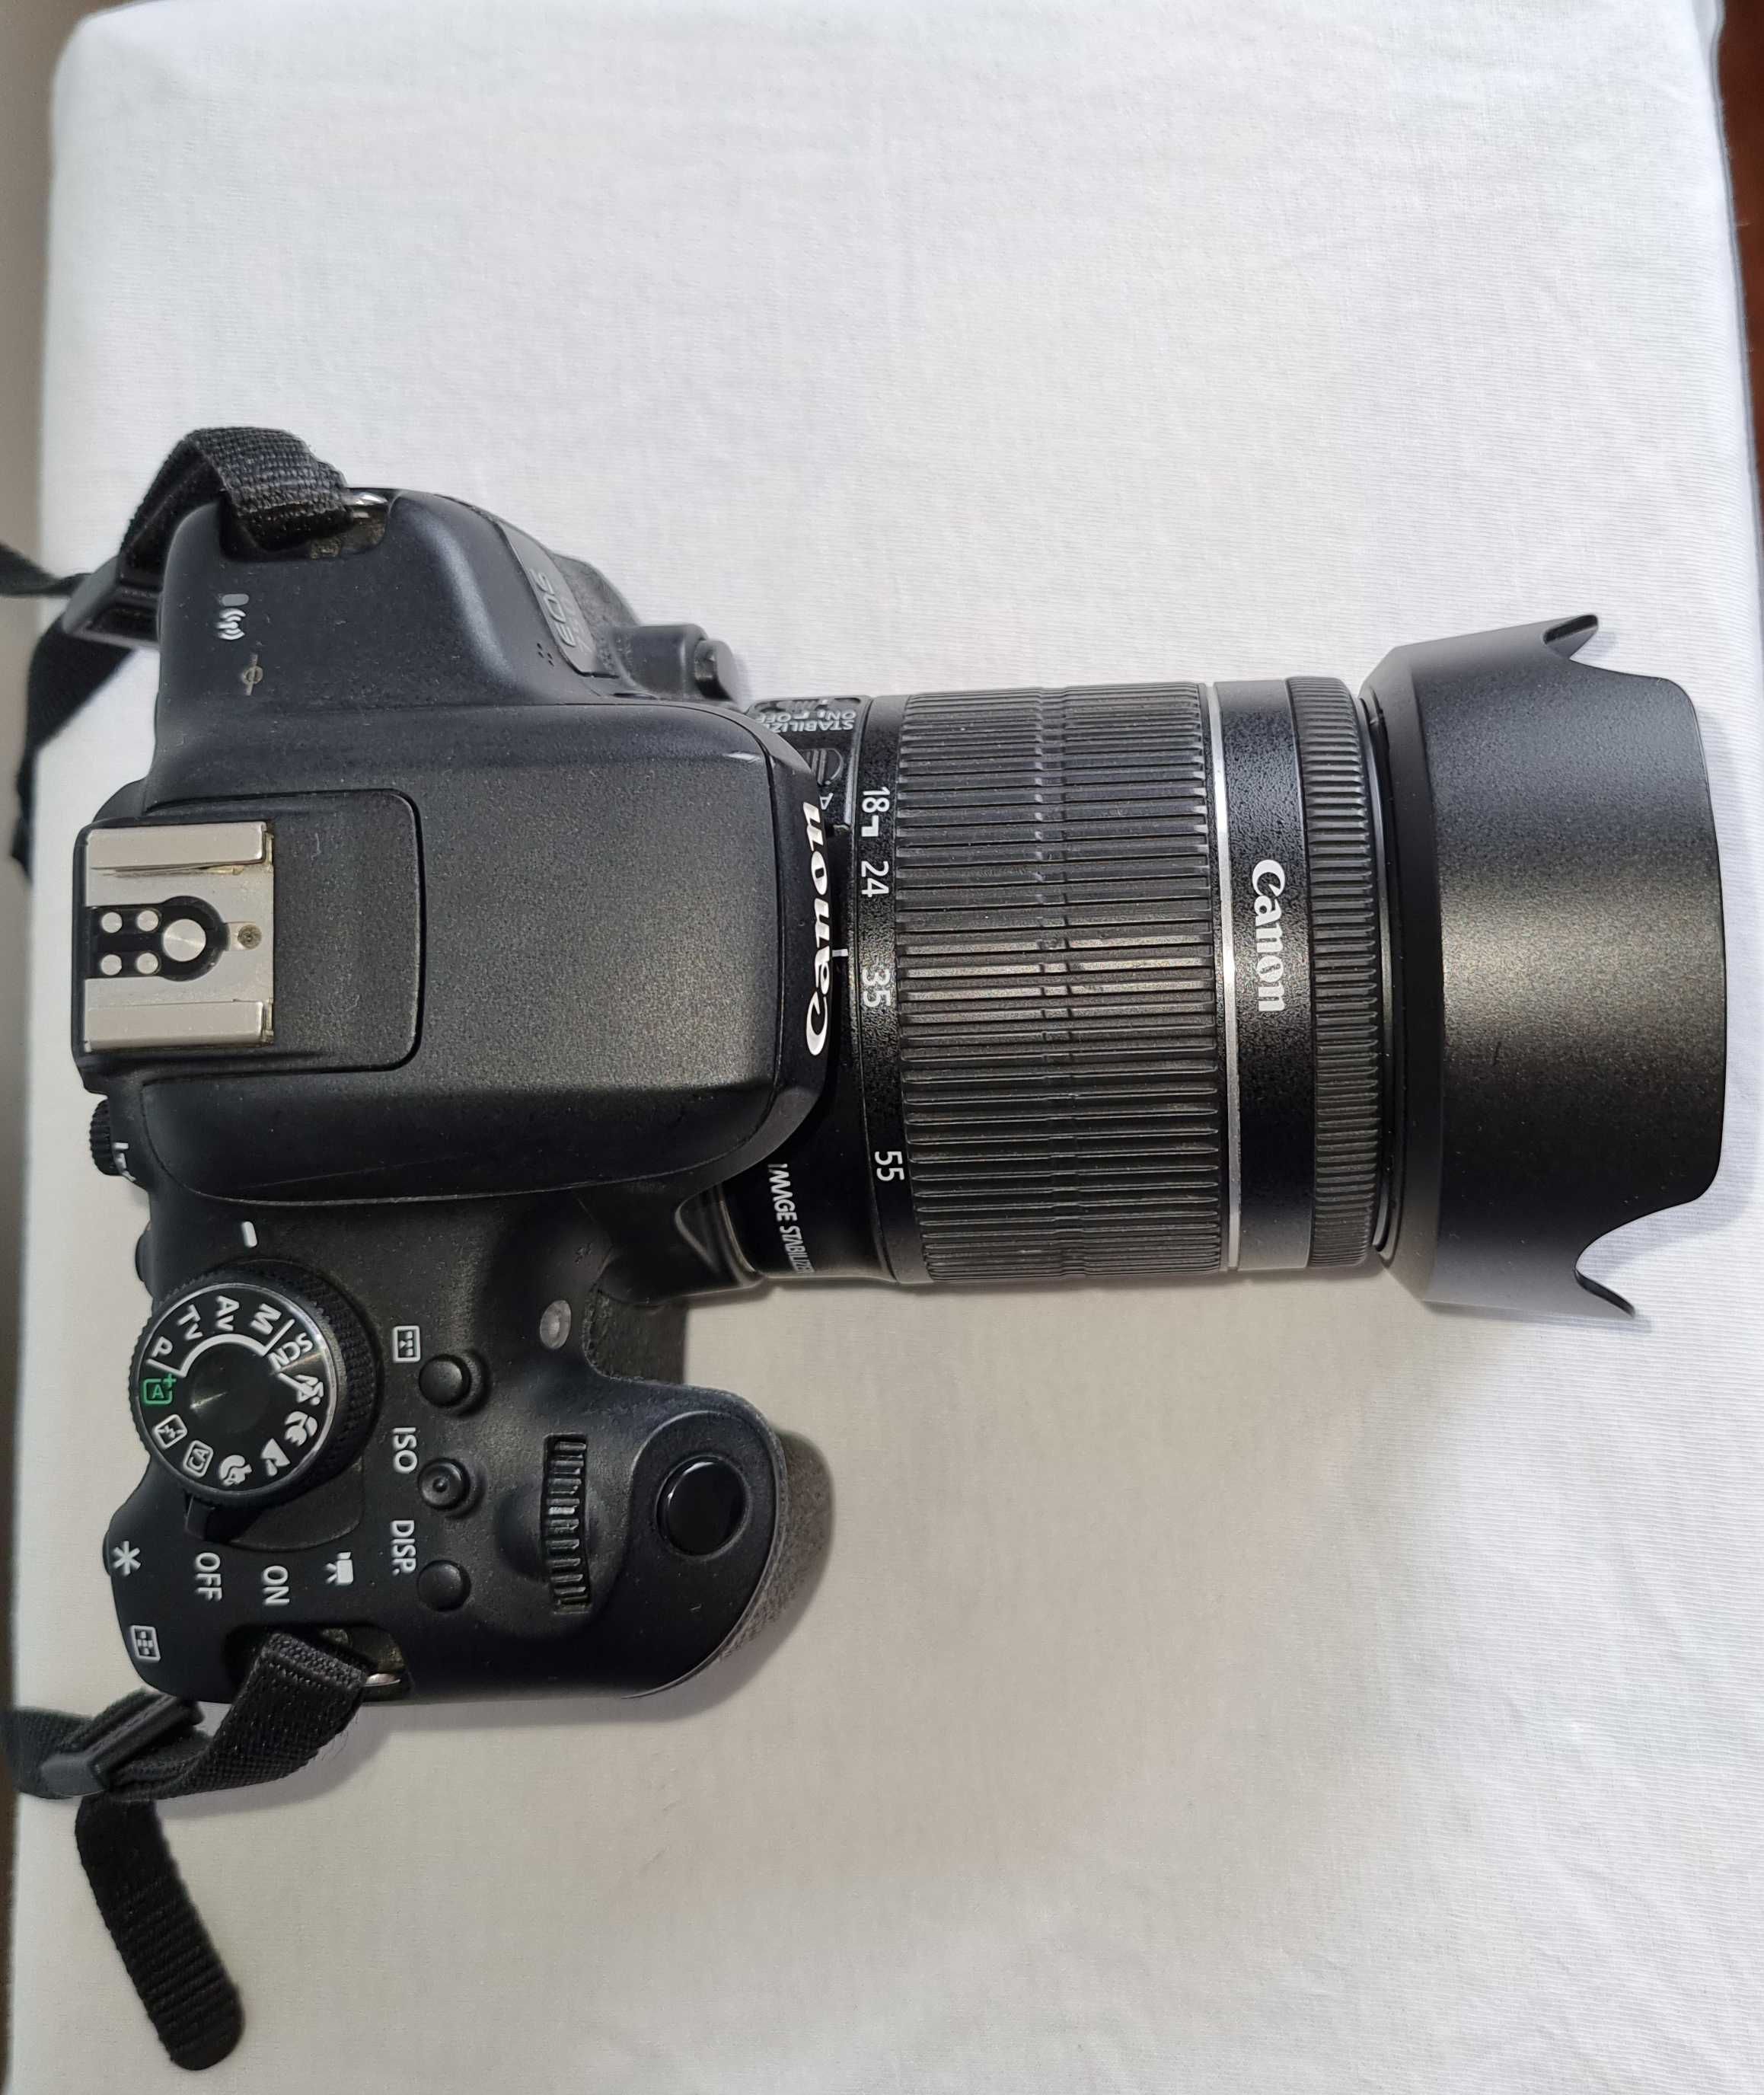 Canon 750 D (przebieg ok 30 000 )+KIT 18-55 mm+Grip+3 Baterie+Kable